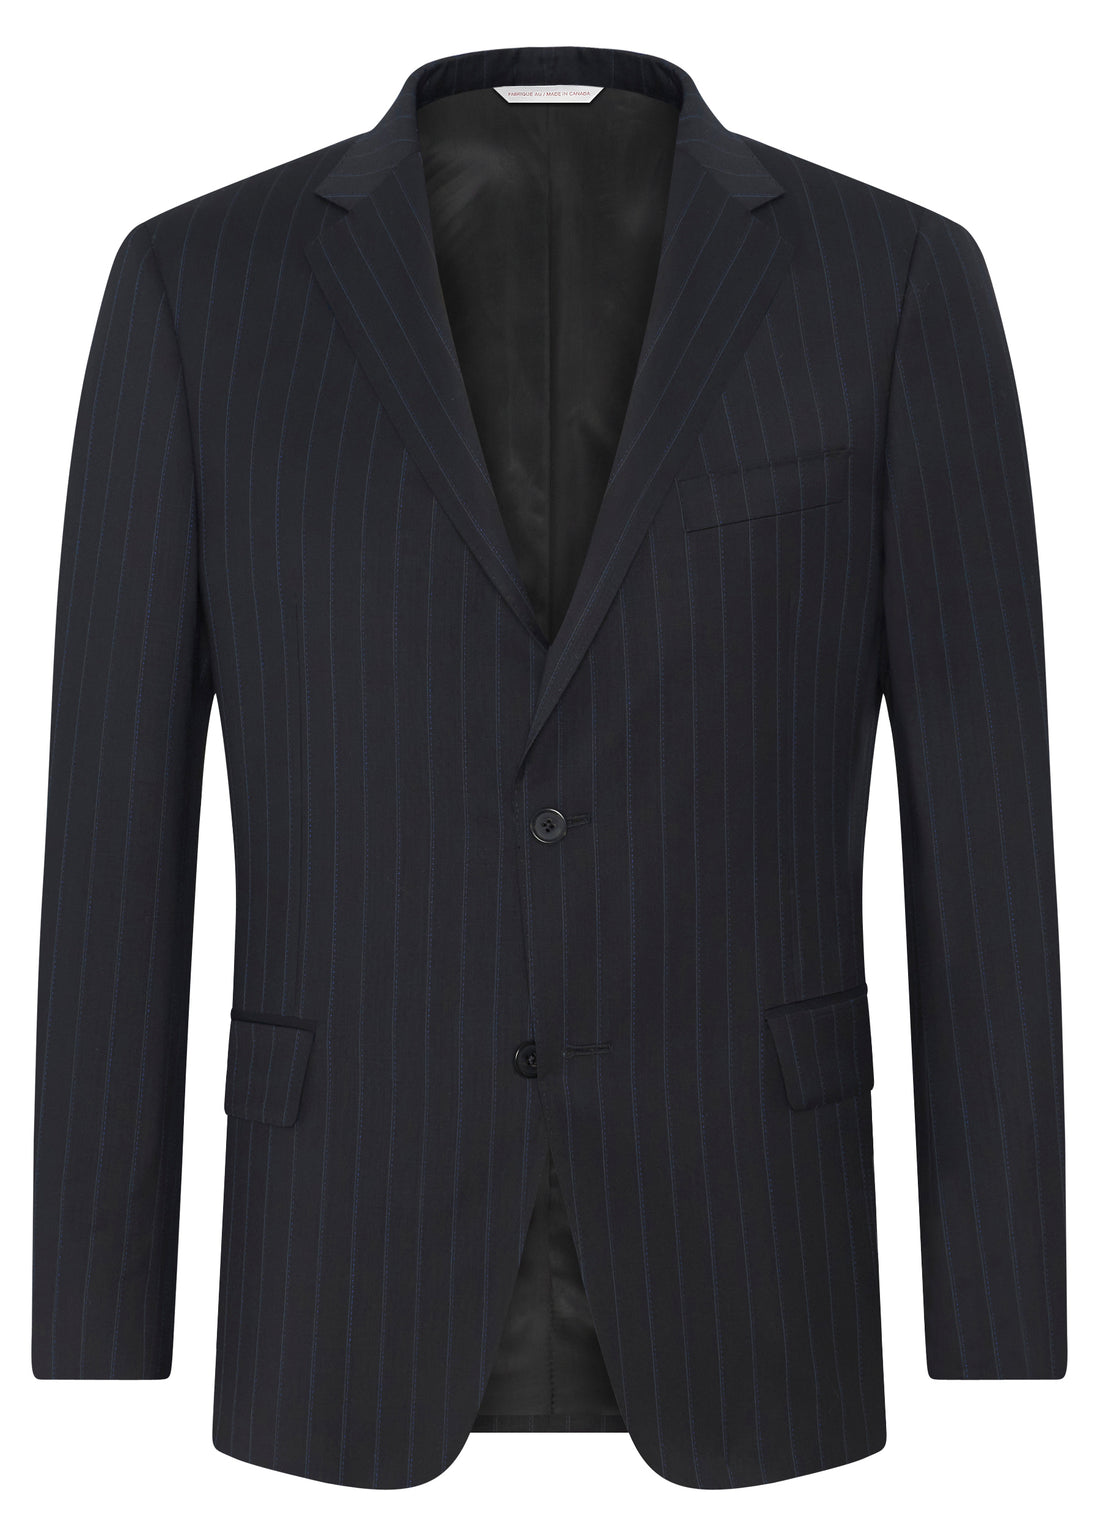 Black Stripe Wool Suit